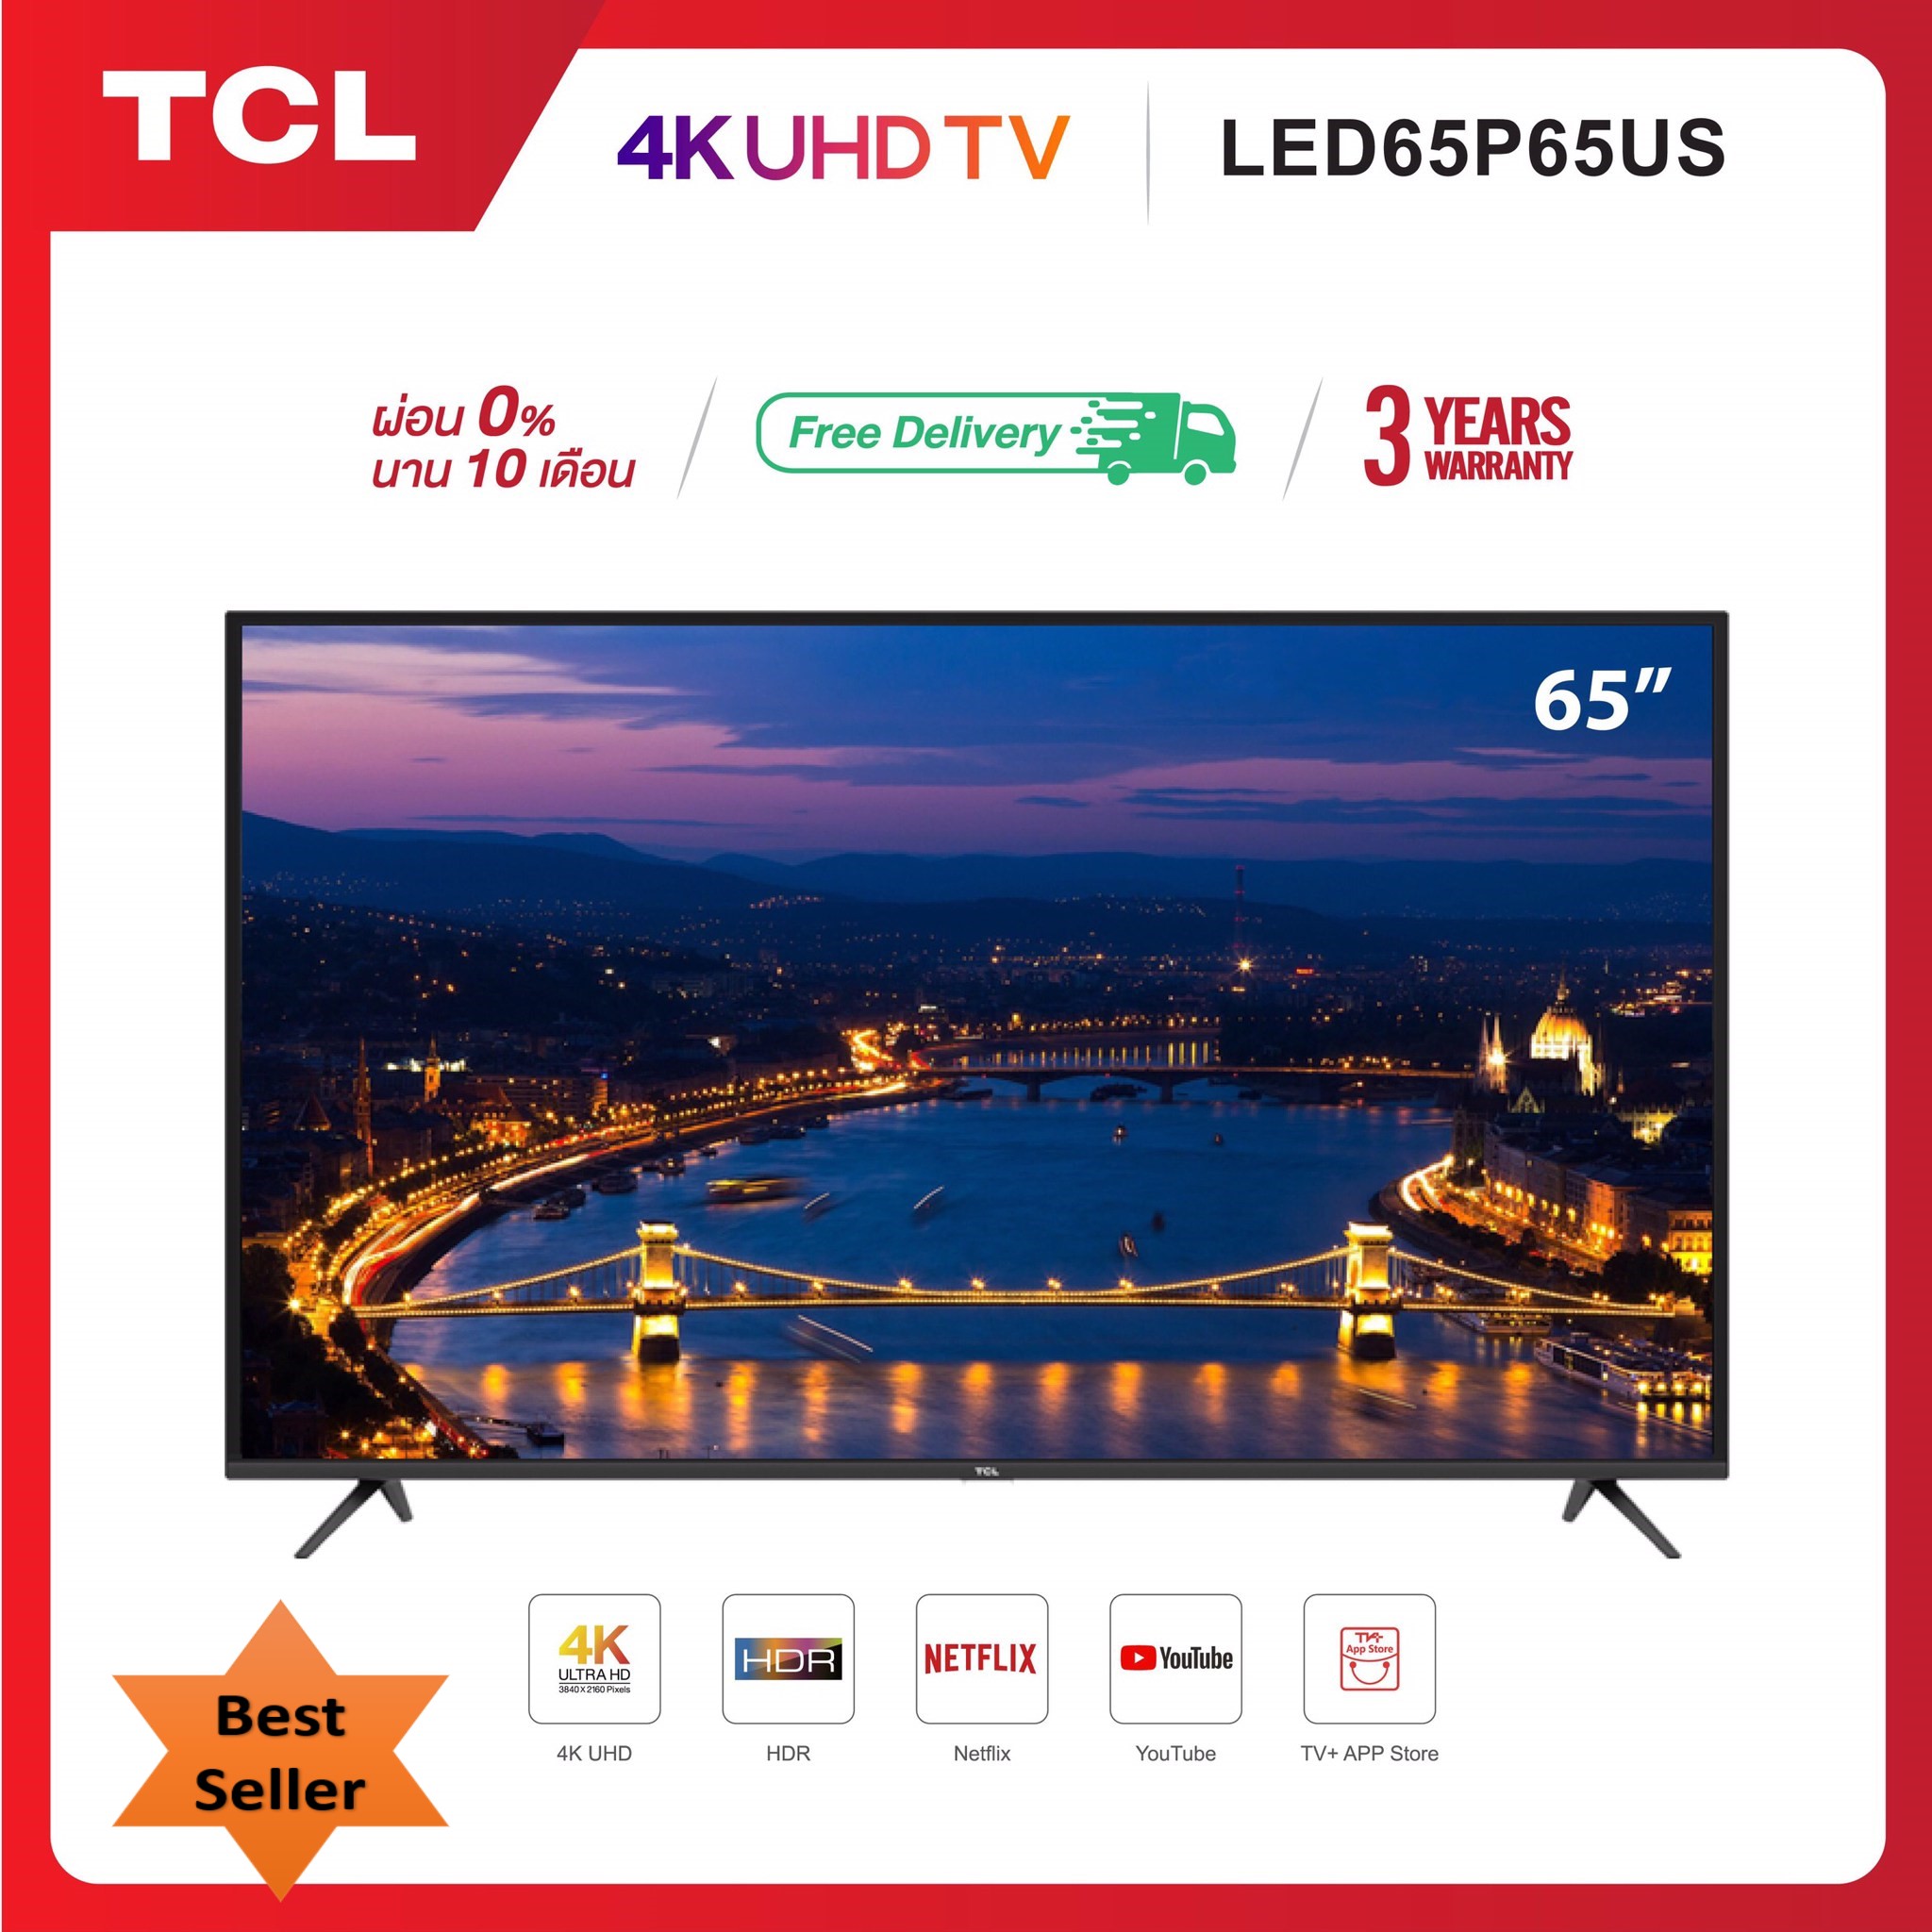 TCL ทีวี 65 นิ้ว LED 4K UHD Wifi internet Smart TV (รุ่น 65P65US) ราคาพิเศษ